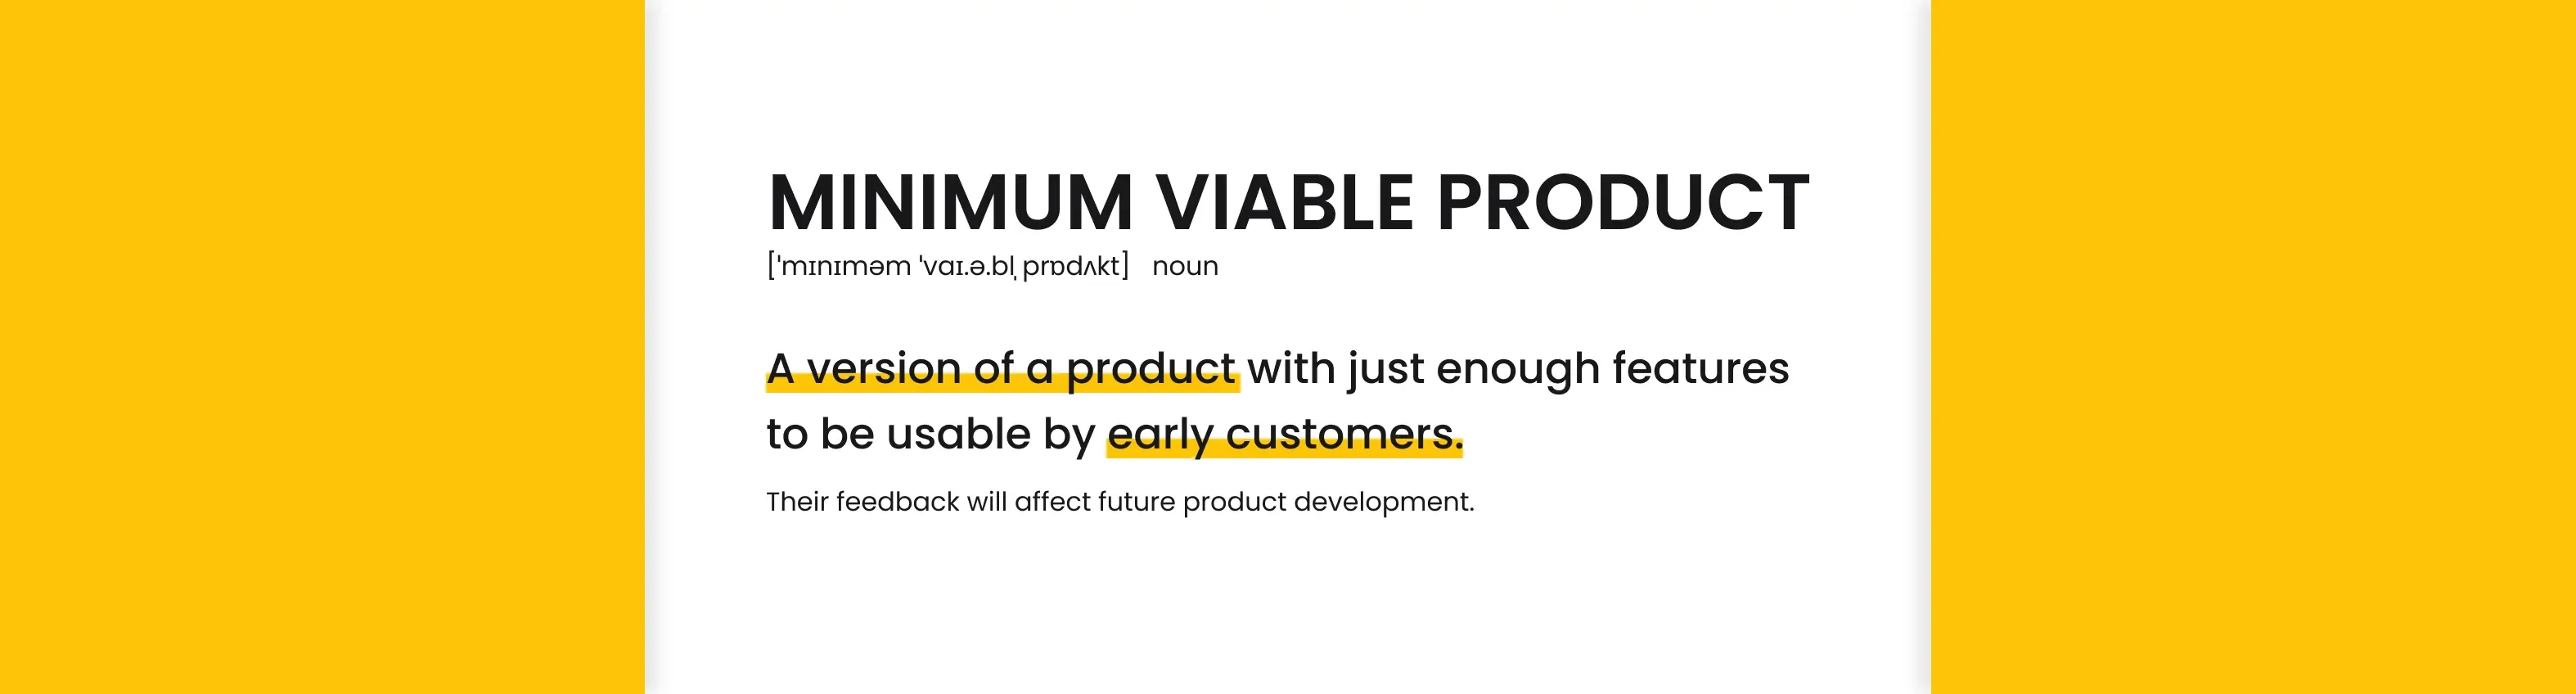 Minimum viable product explained